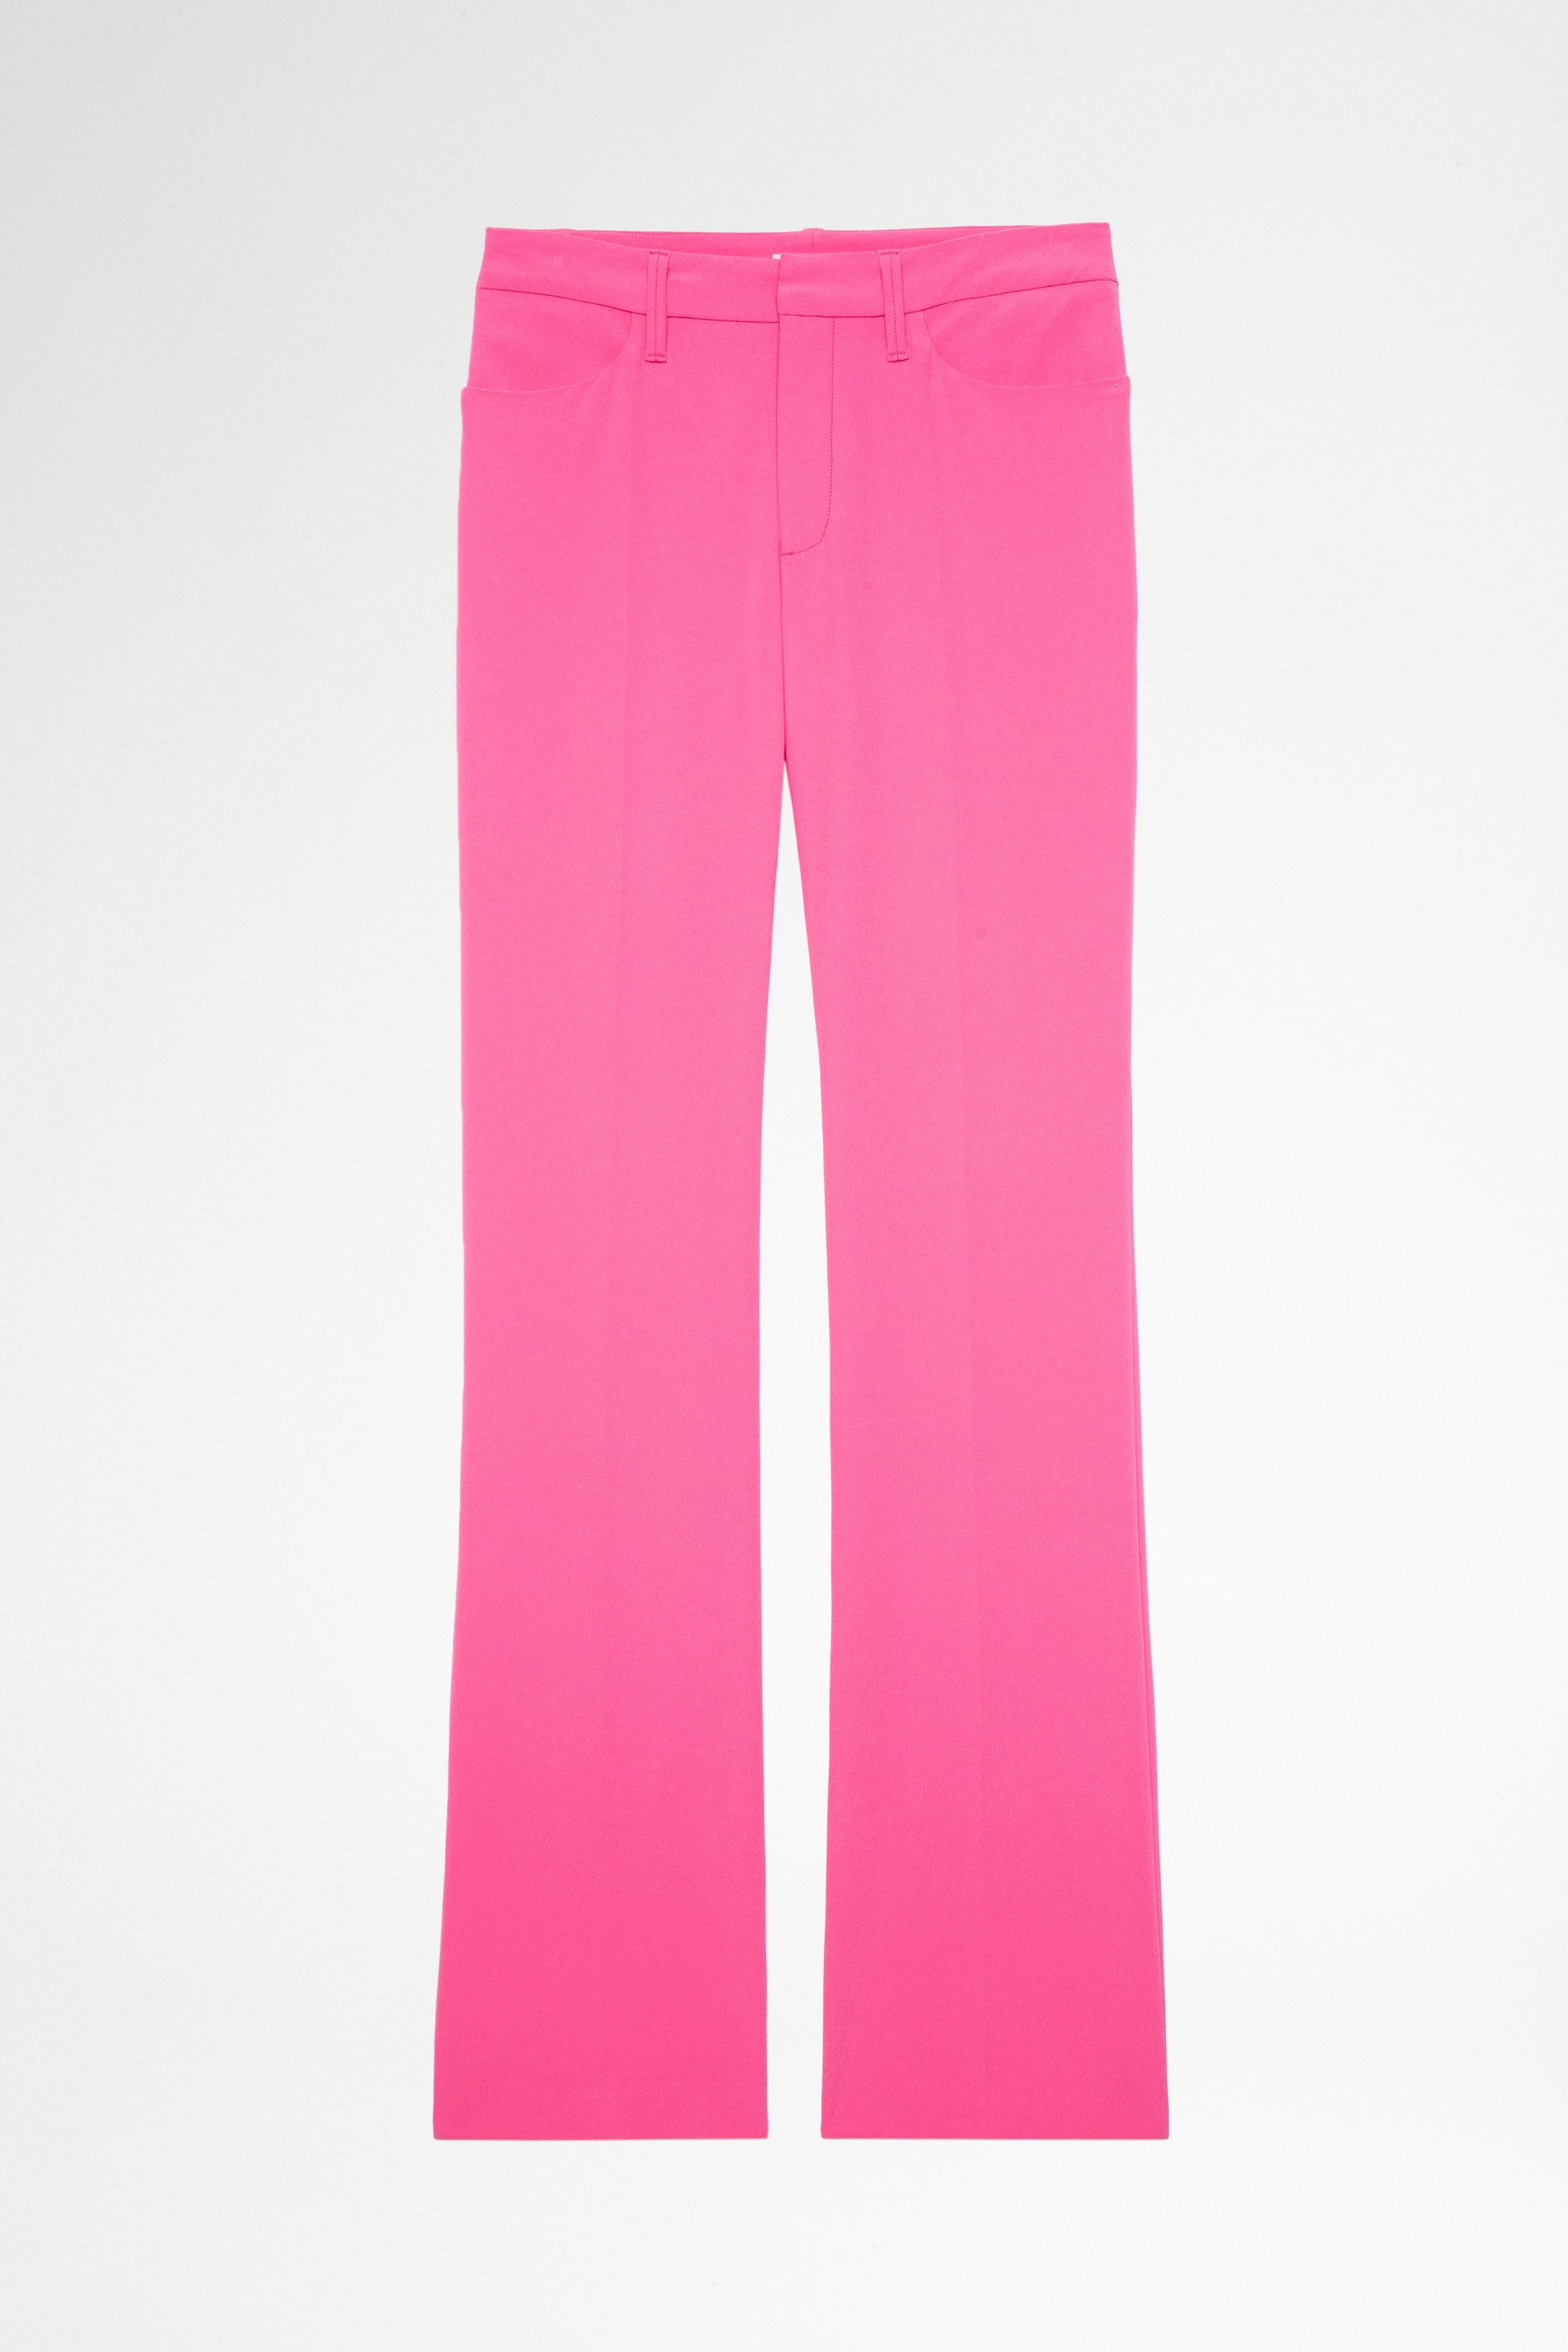 Pistol Pants Women’s flared pink pants